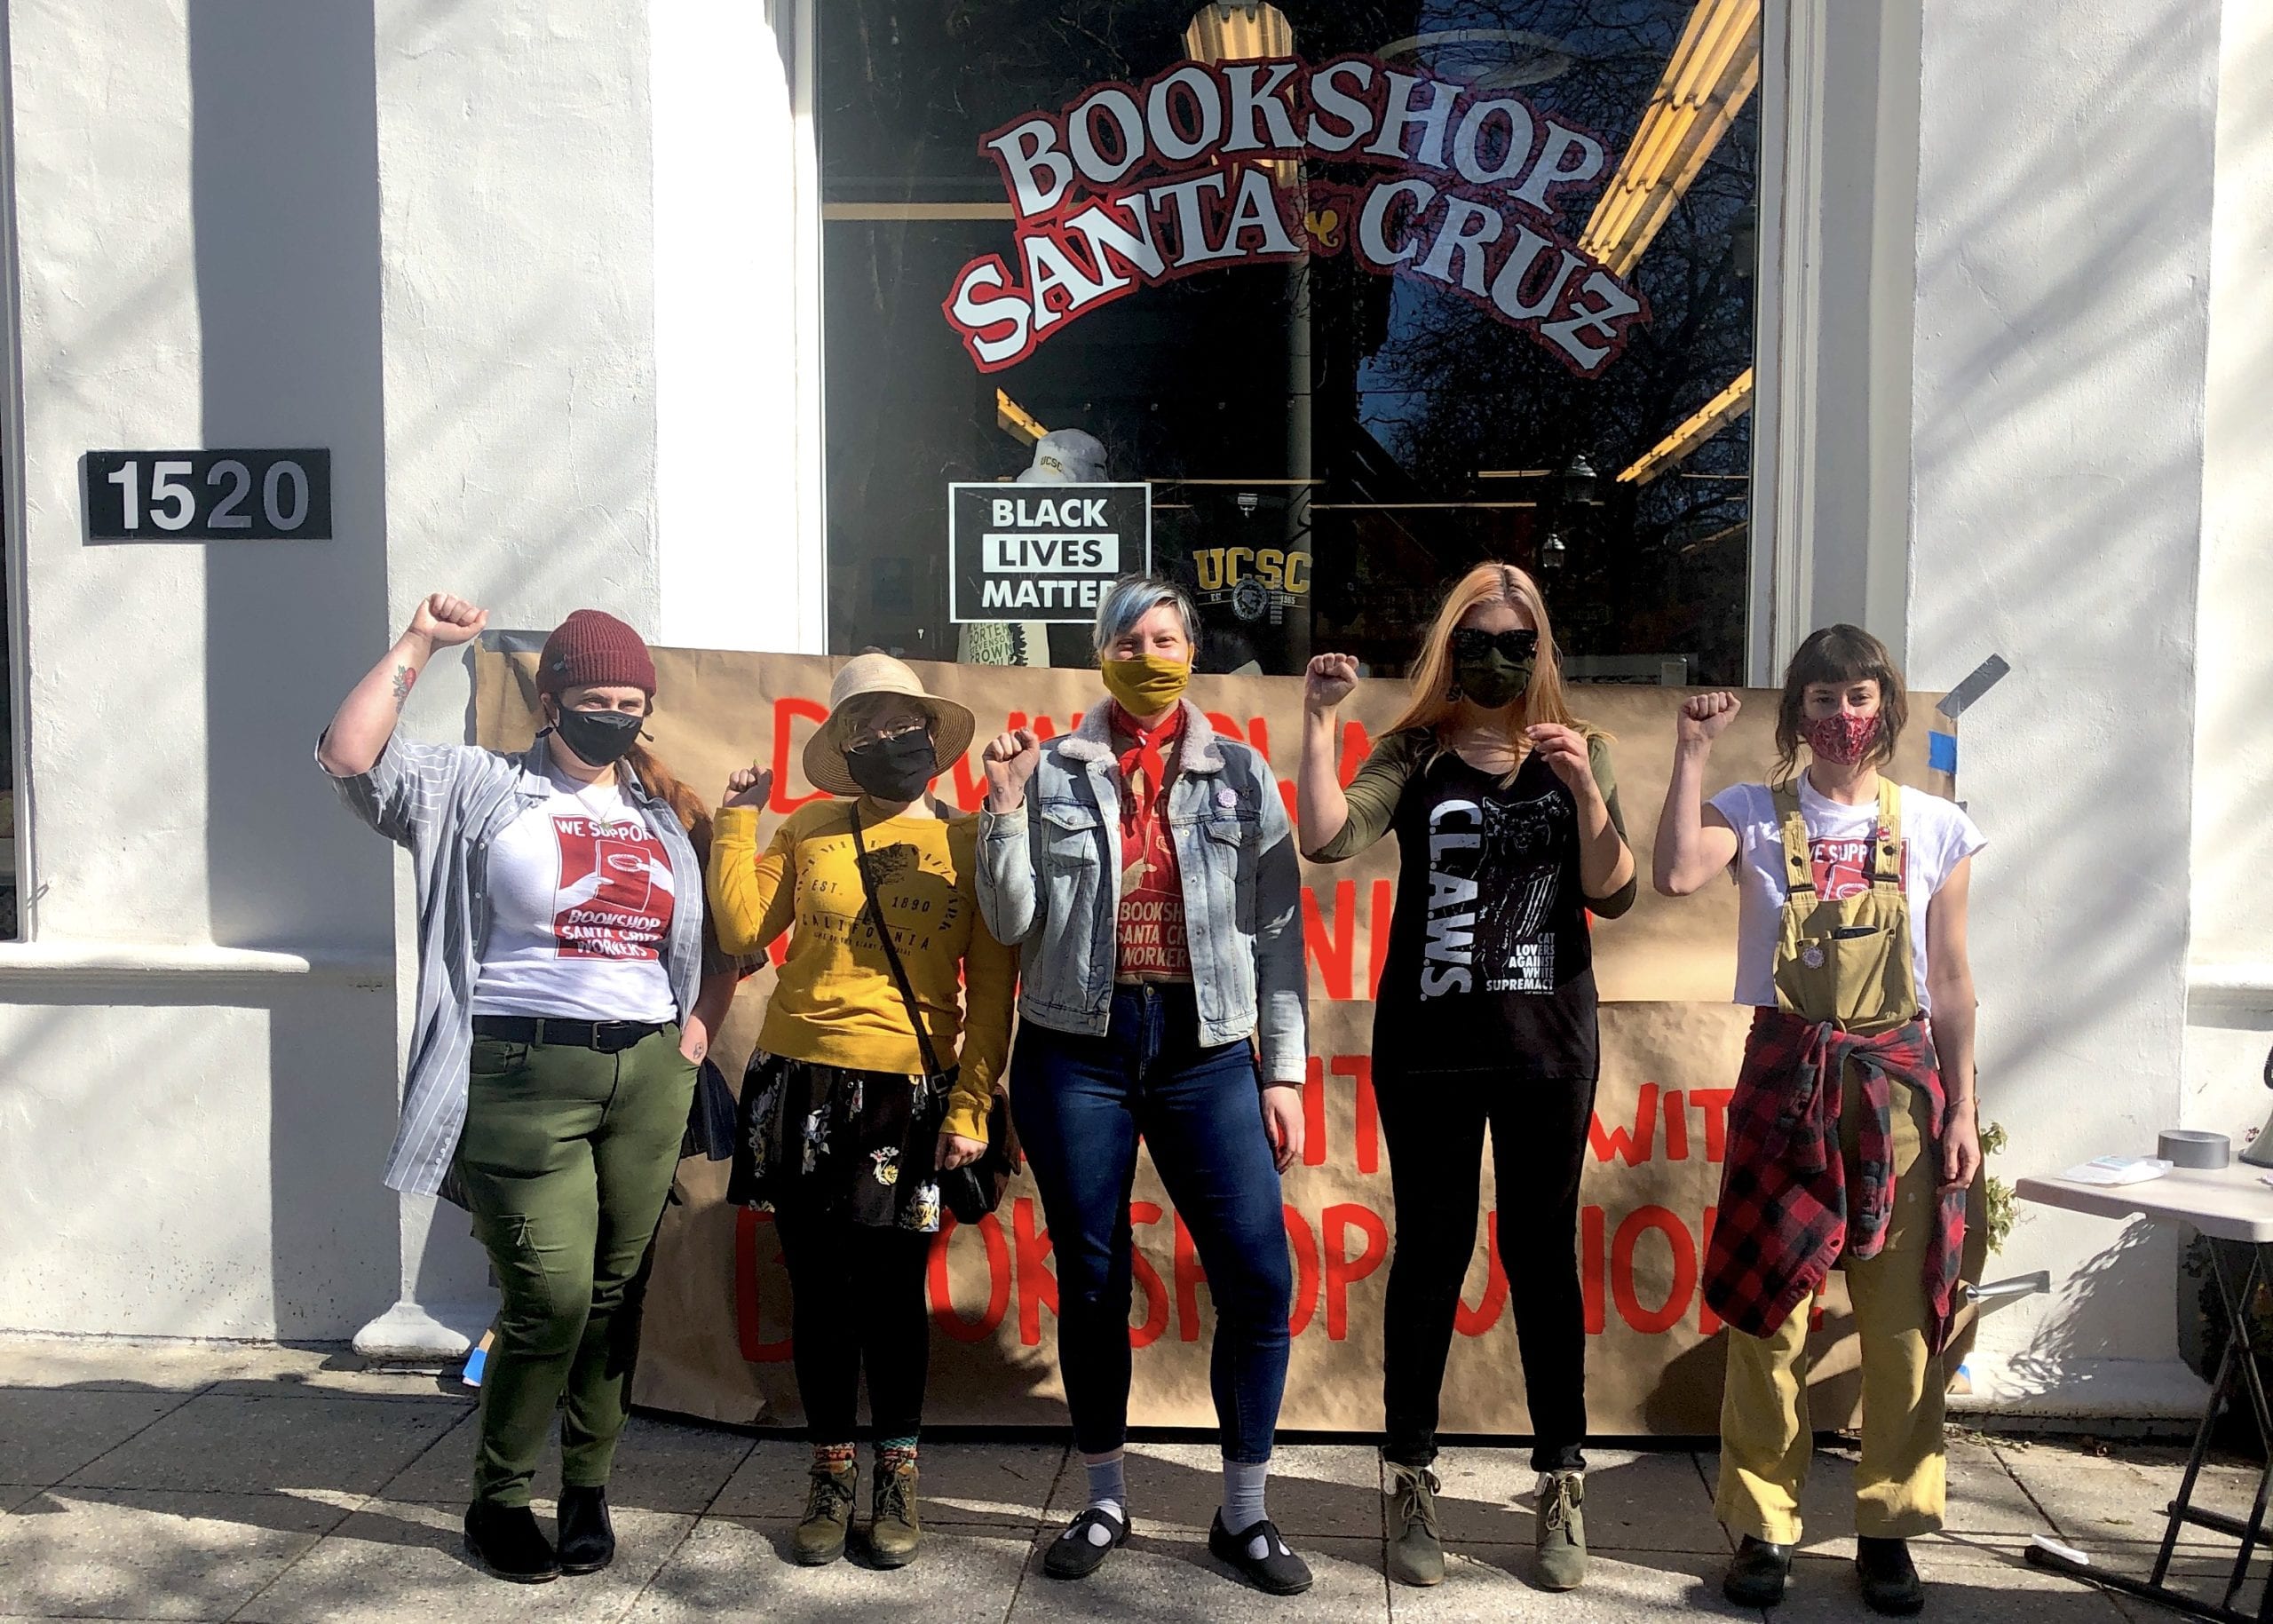 Bookshop Santa Cruz workers pose in front of store